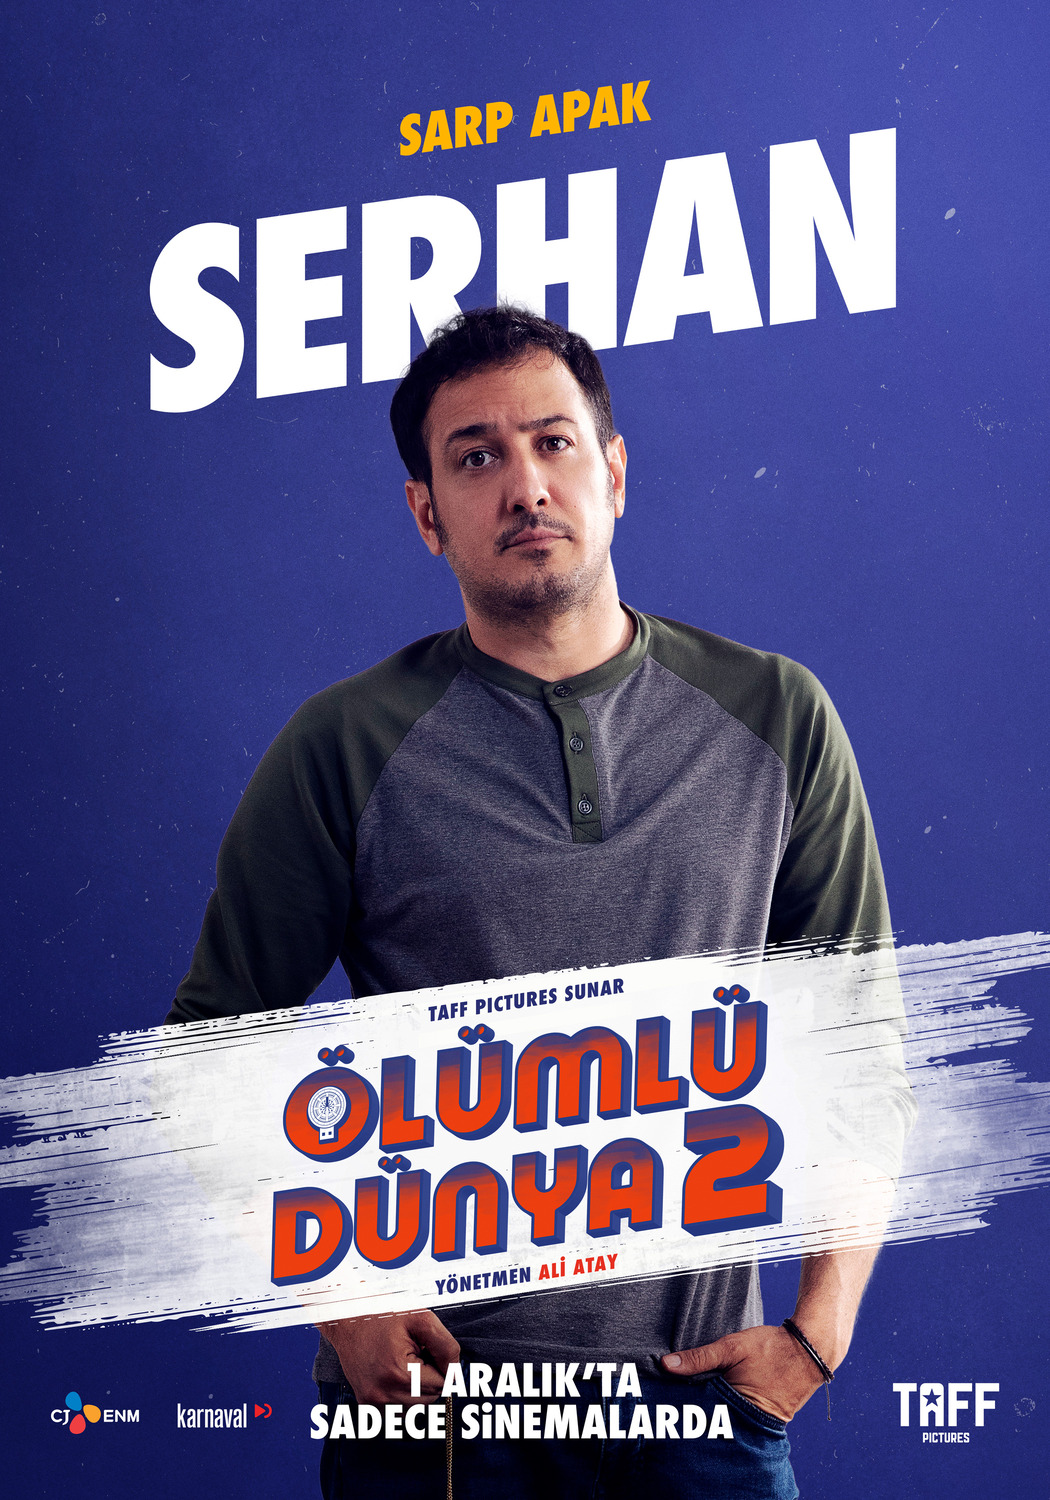 Extra Large Movie Poster Image for Ölümlü Dünya 2 (#11 of 11)